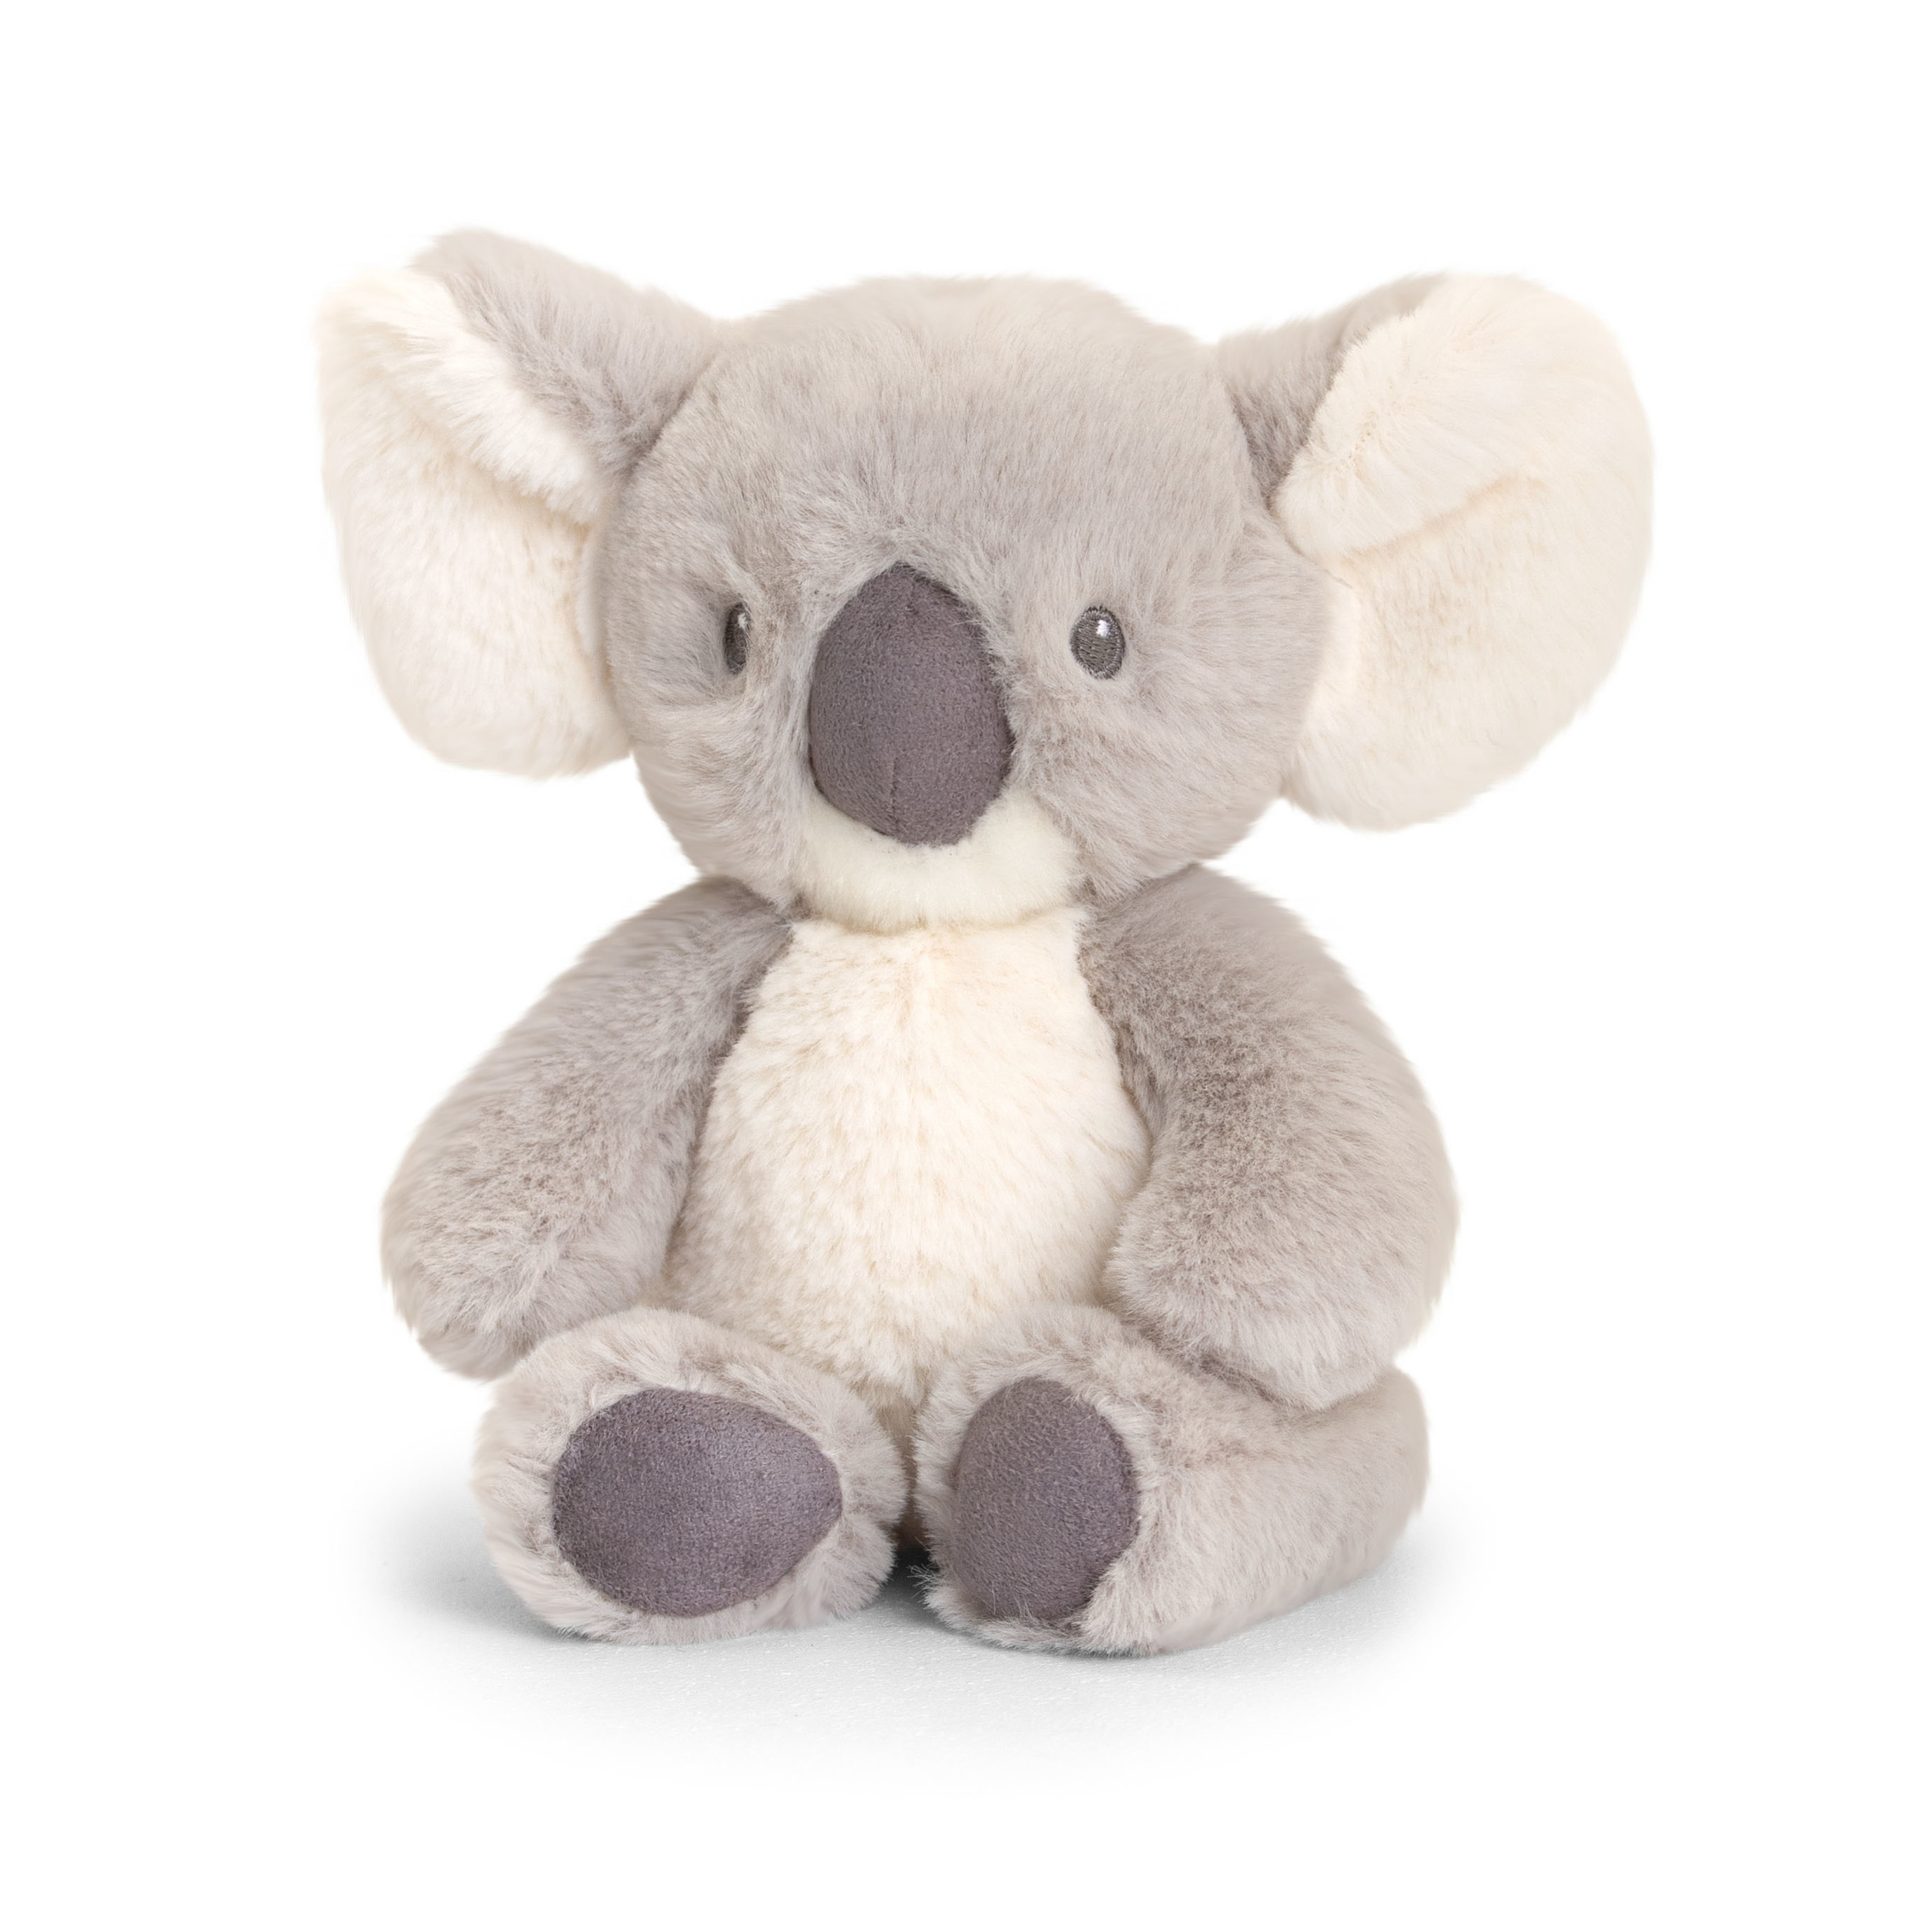 Pluche knuffel dier kleine koala 14 cm